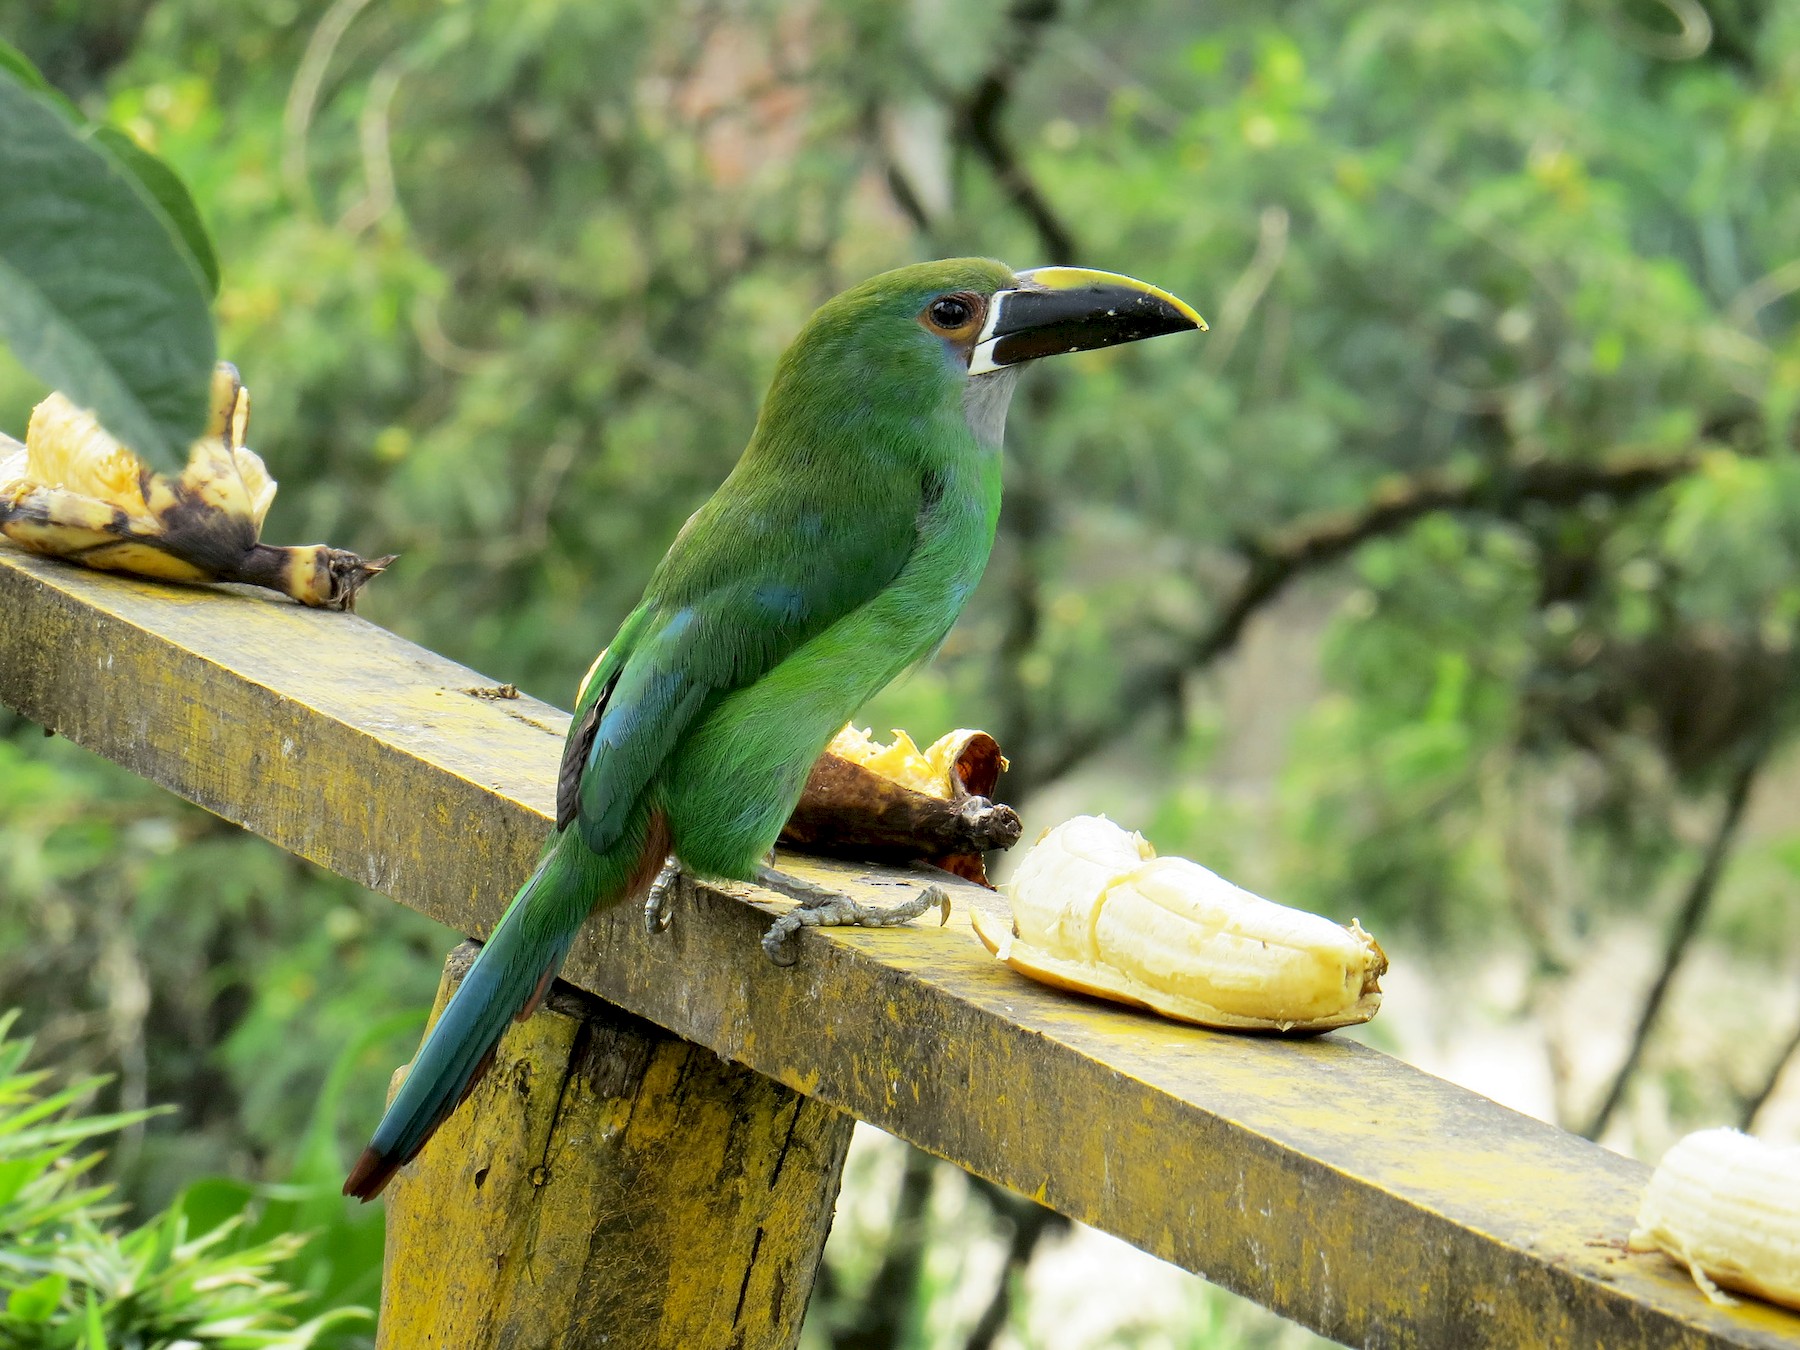 Northern Green Toucanet Eating Banana